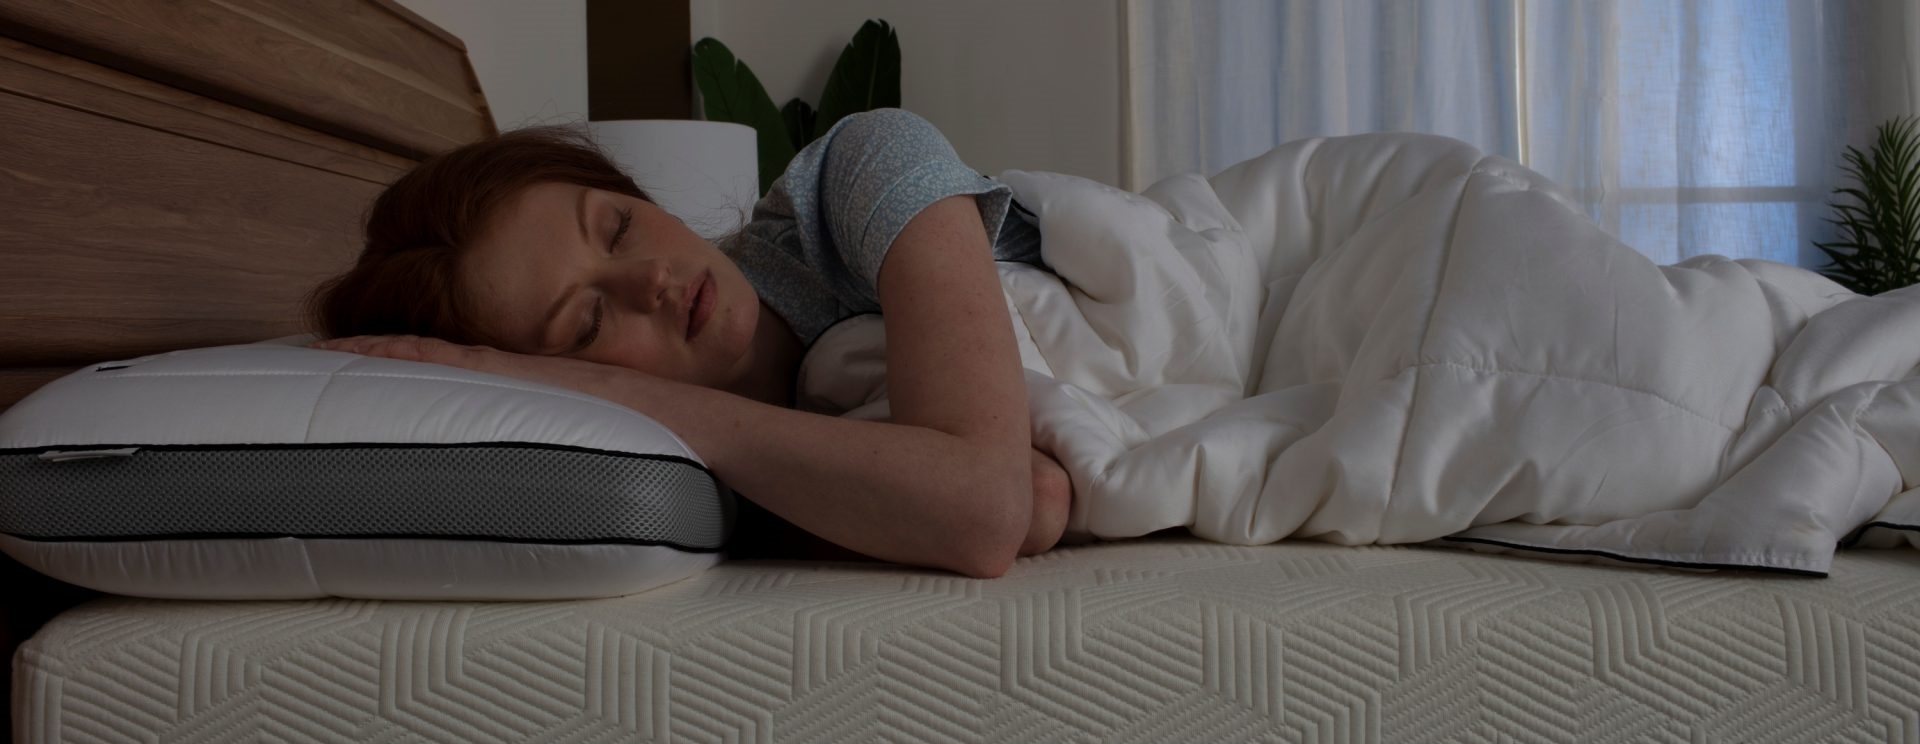 girl sleeping on a hybrid mattress